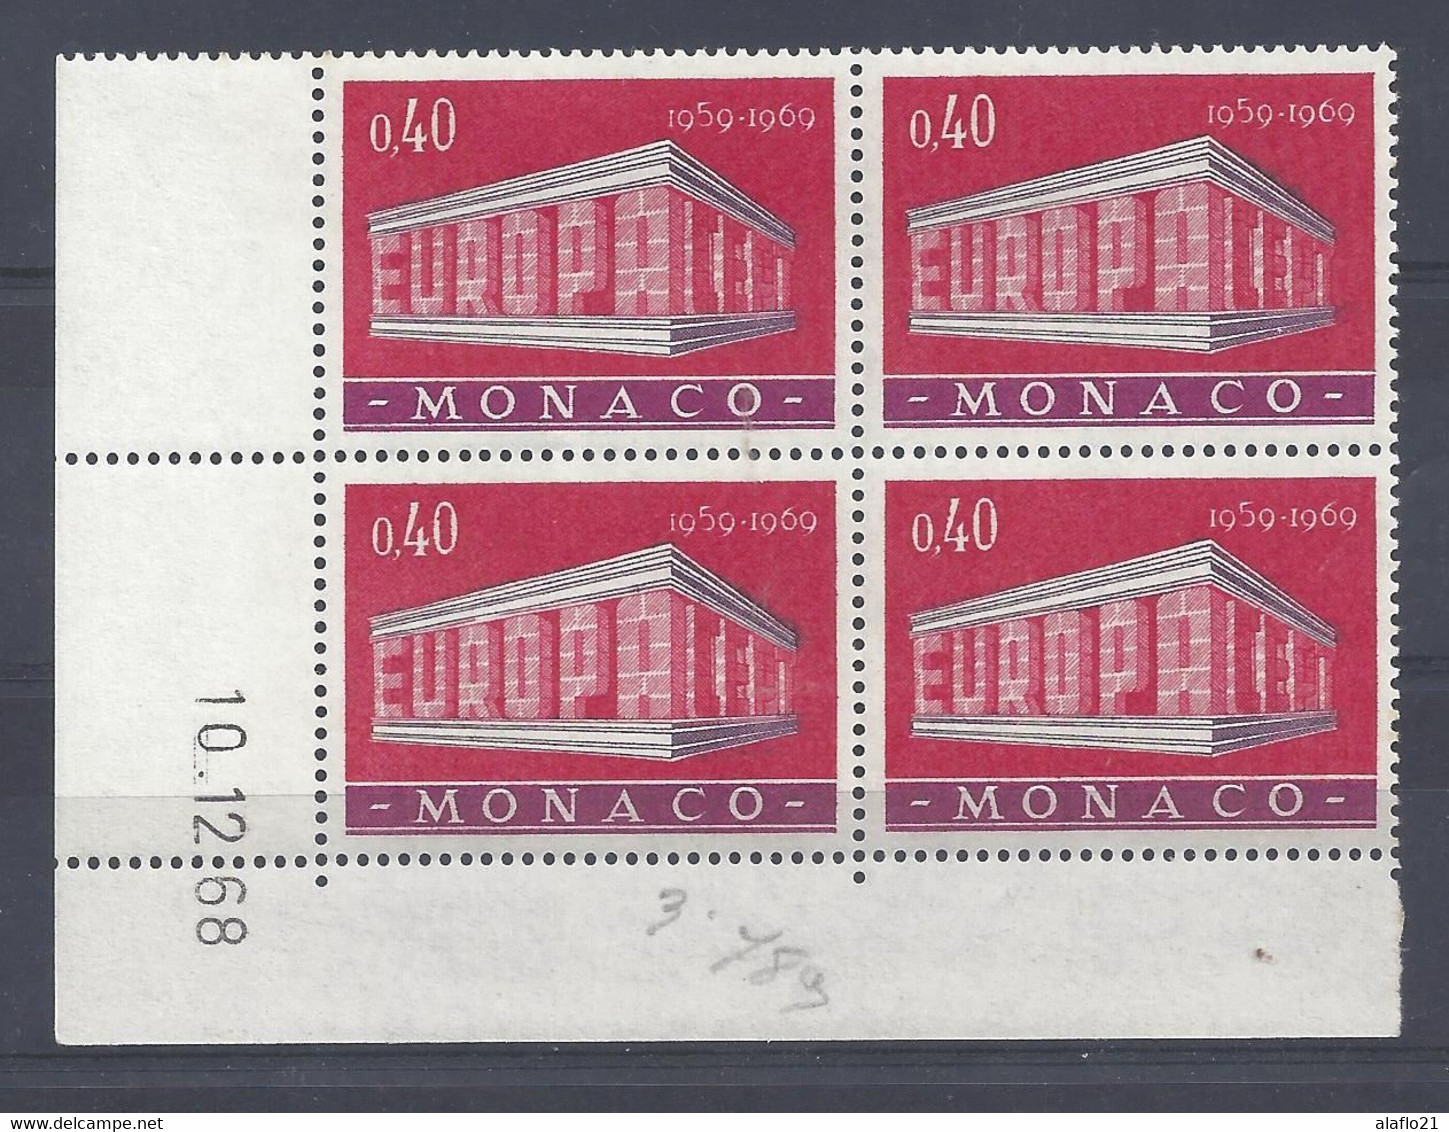 MONACO N° 789 - Bloc De 4 COIN DATE - NEUF SANS CHARNIERE - 10/12/68 - Ungebraucht